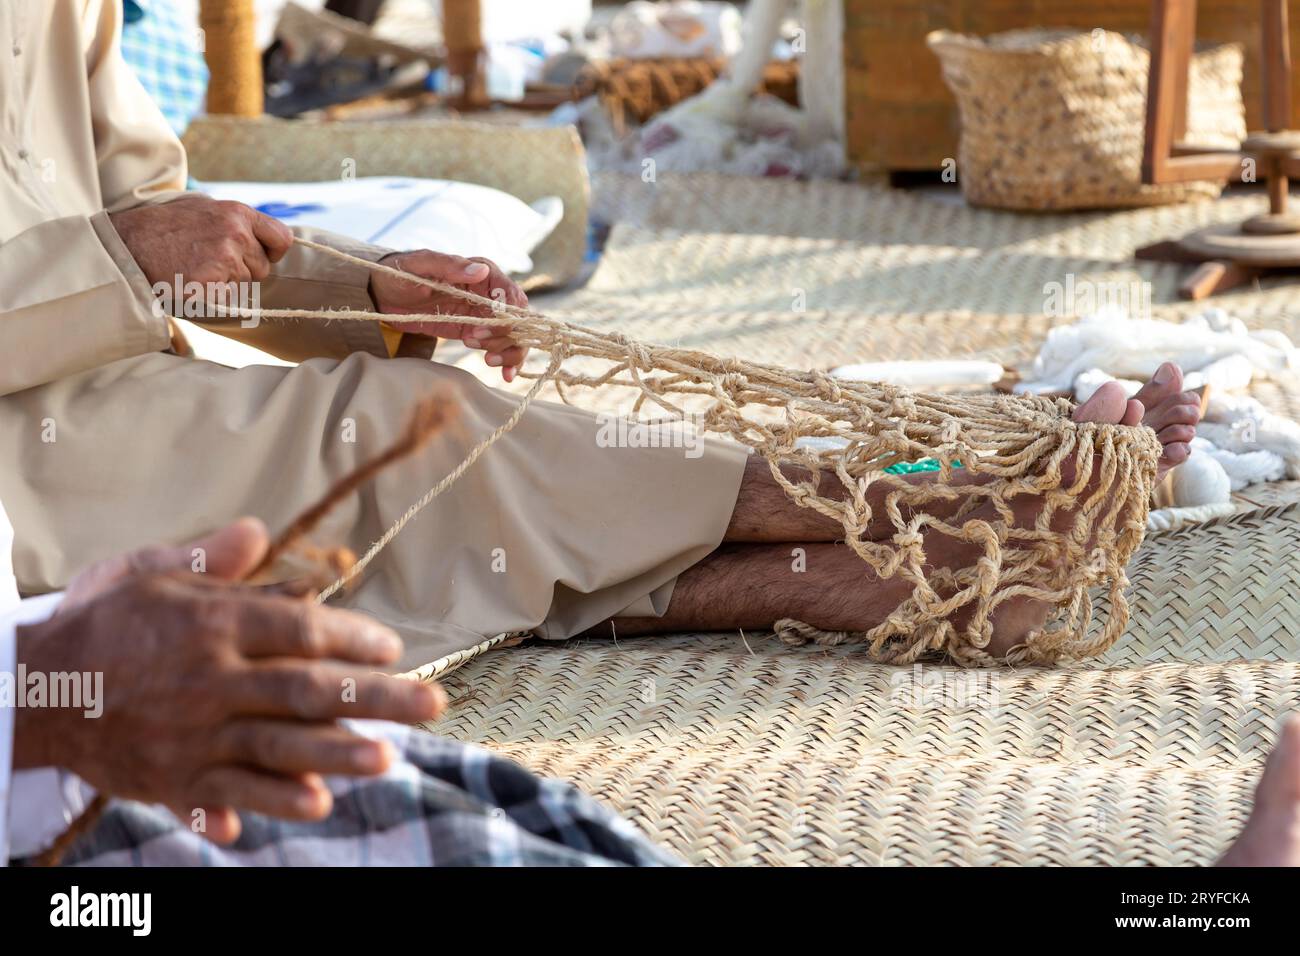 https://c8.alamy.com/comp/2RYFCKA/old-man-is-knitting-traditional-fishing-net-hands-in-frame-2RYFCKA.jpg